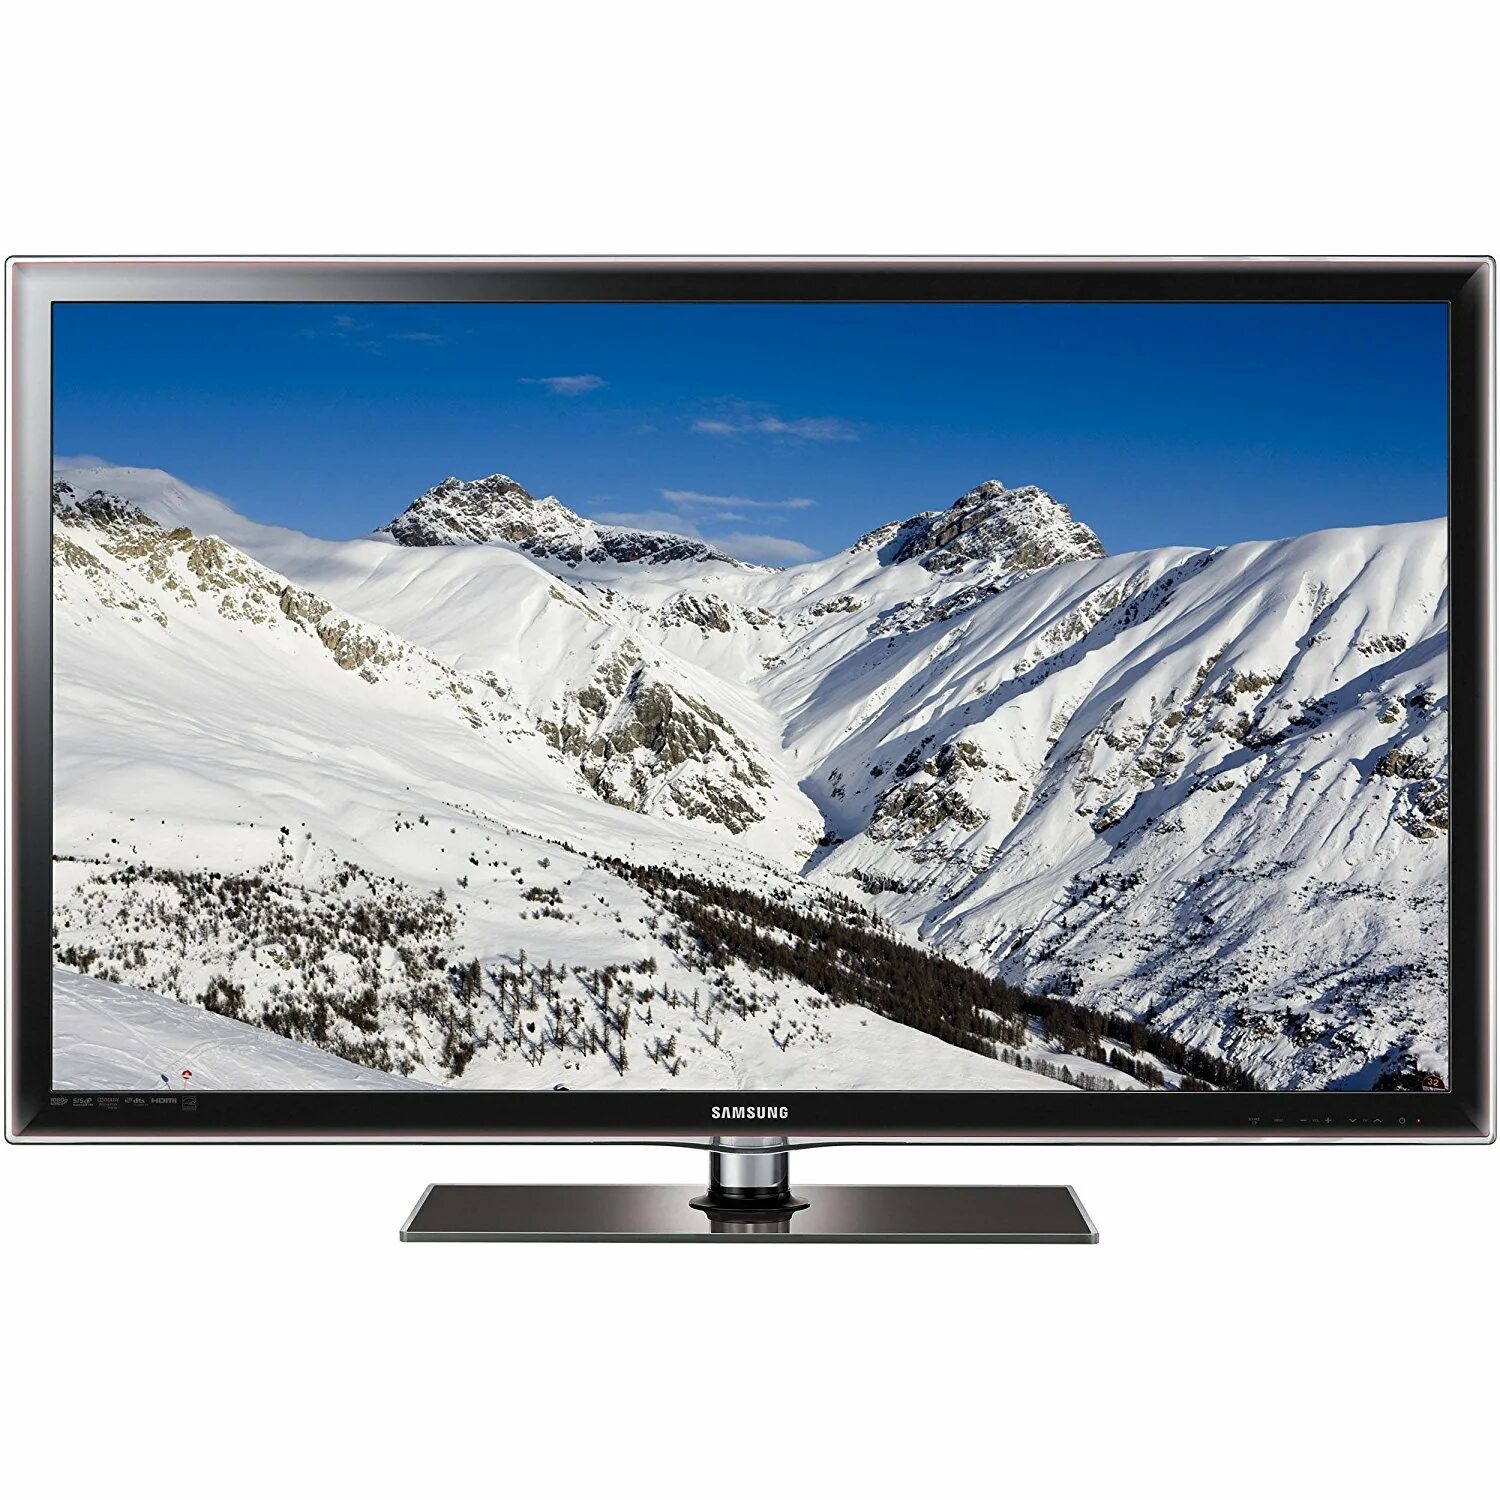 Samsung led 46 Smart TV. Samsung TV 40. Samsung led 40 Smart TV 2013. Телевизор самсунг 40 дюймов смарт ТВ.